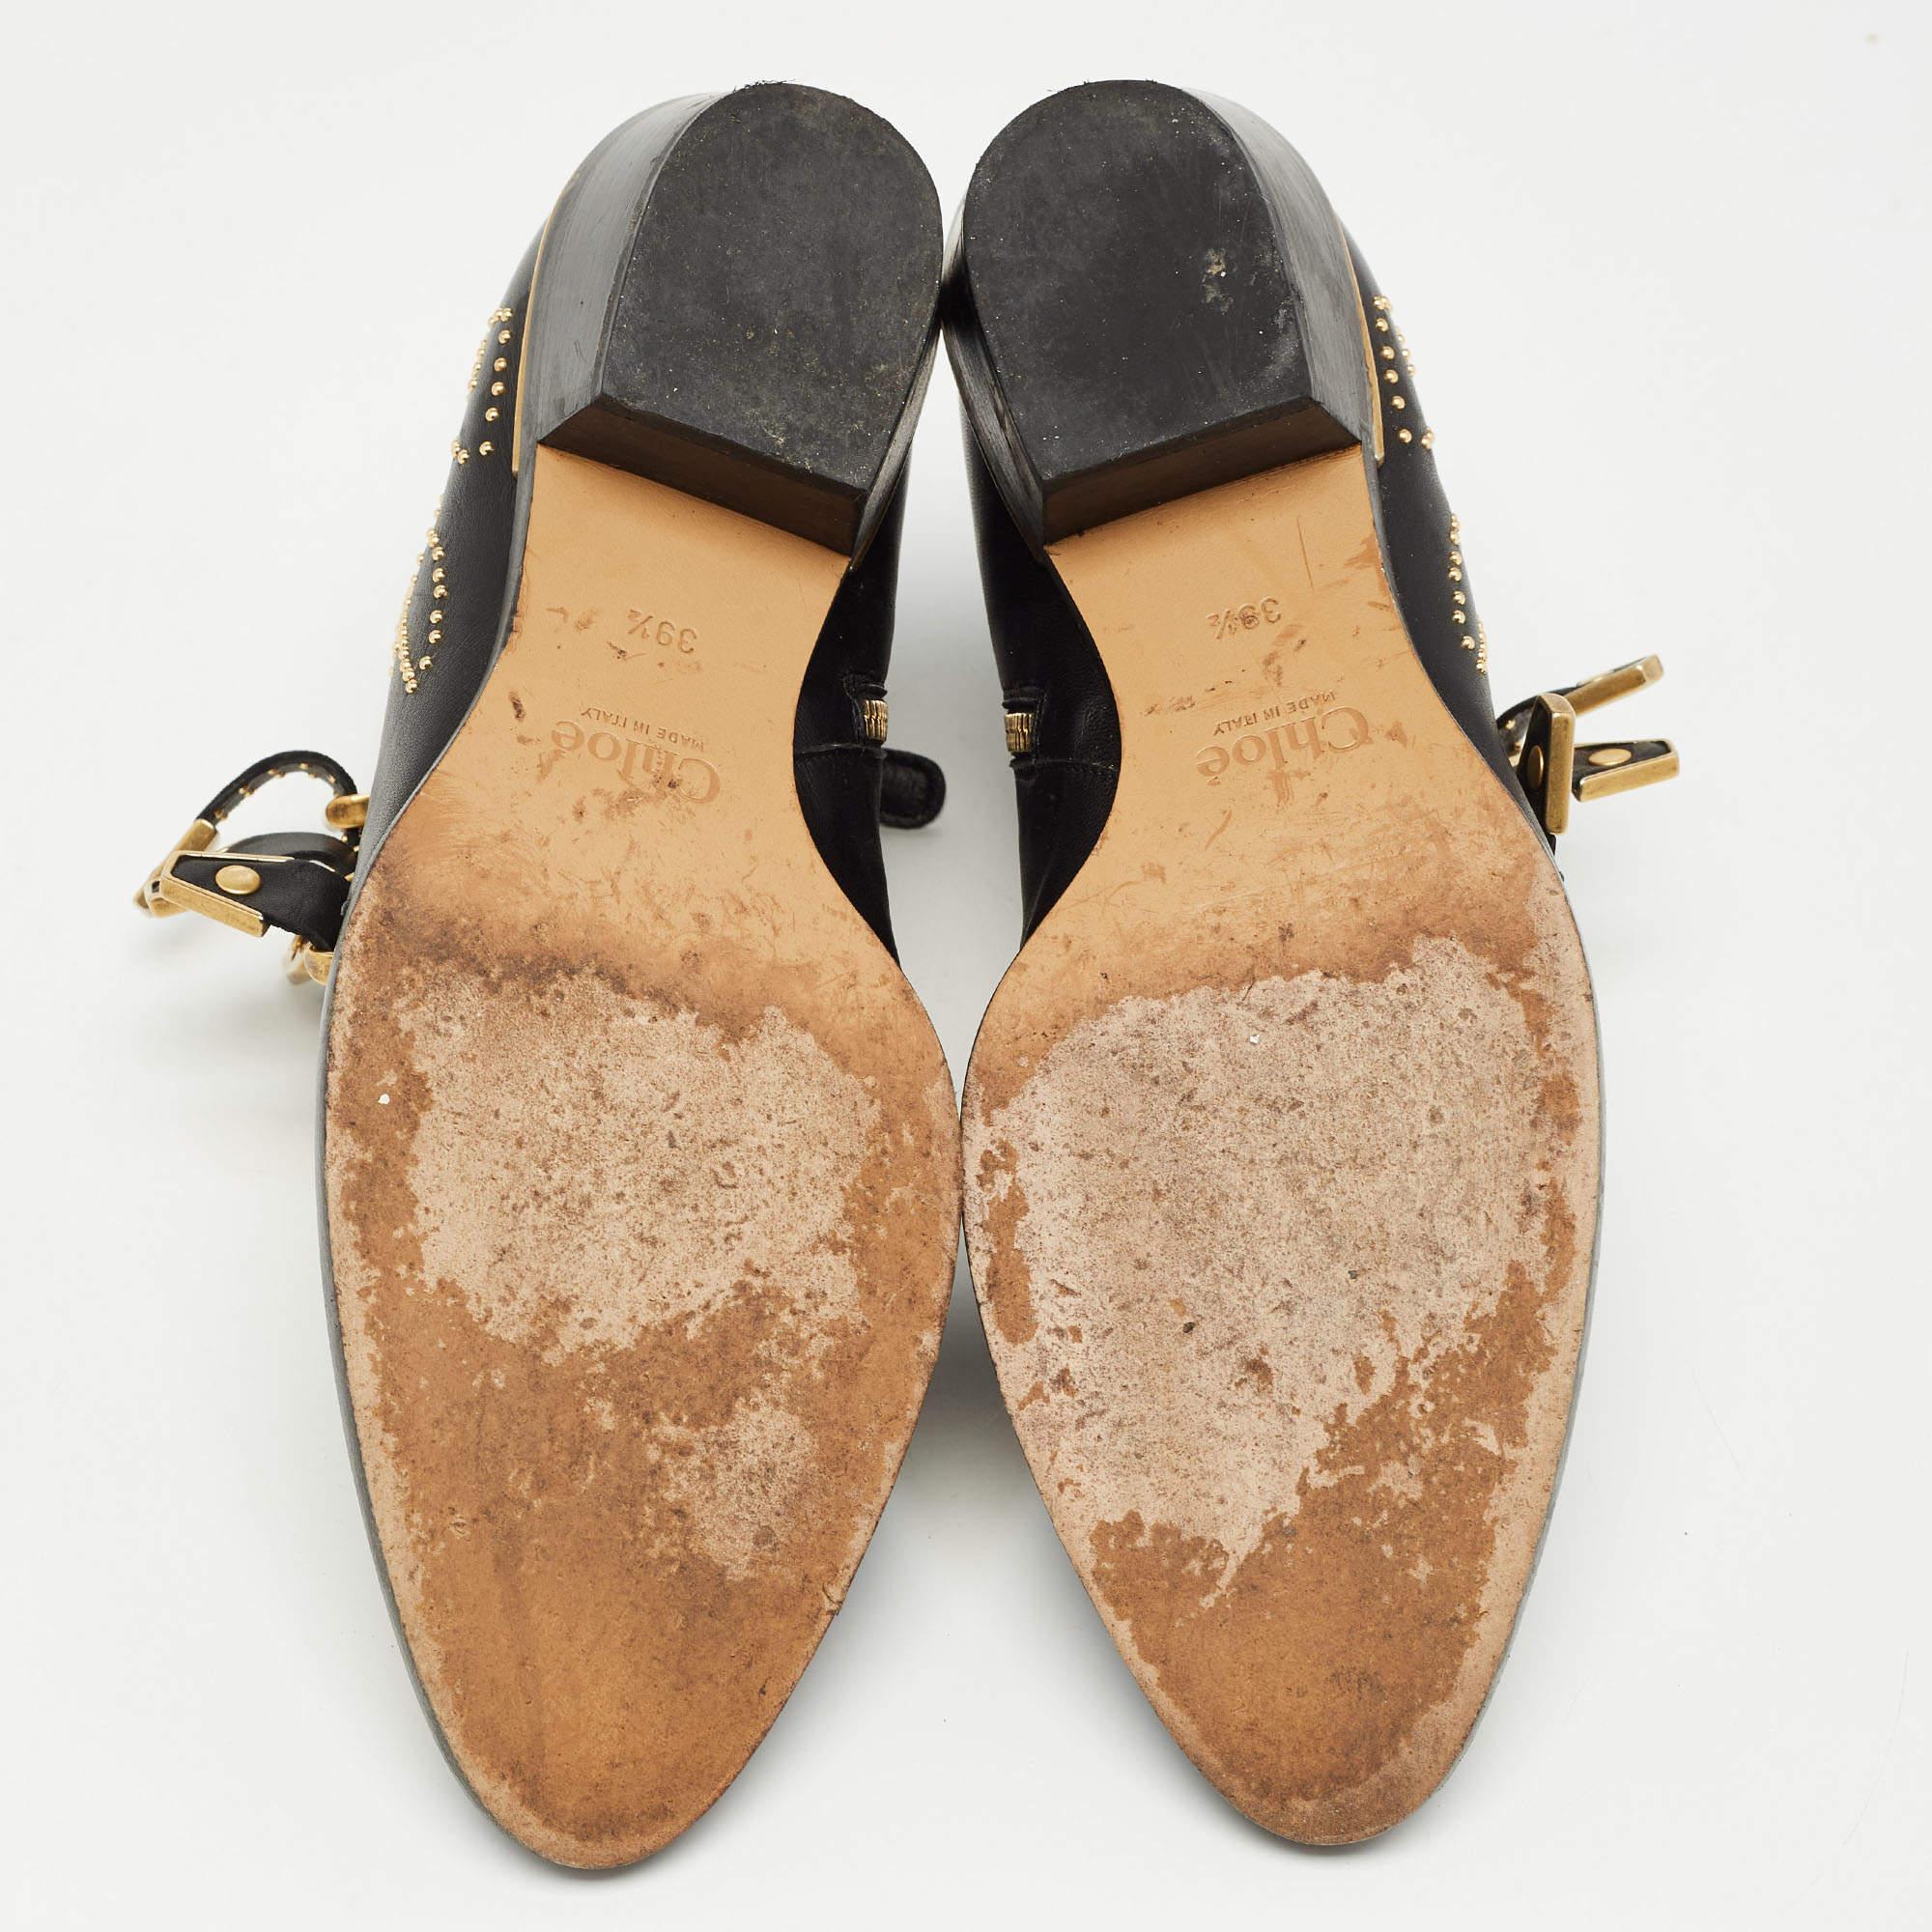 Chloe Black Leather Susanna Ankle Boots Size 39.5 3